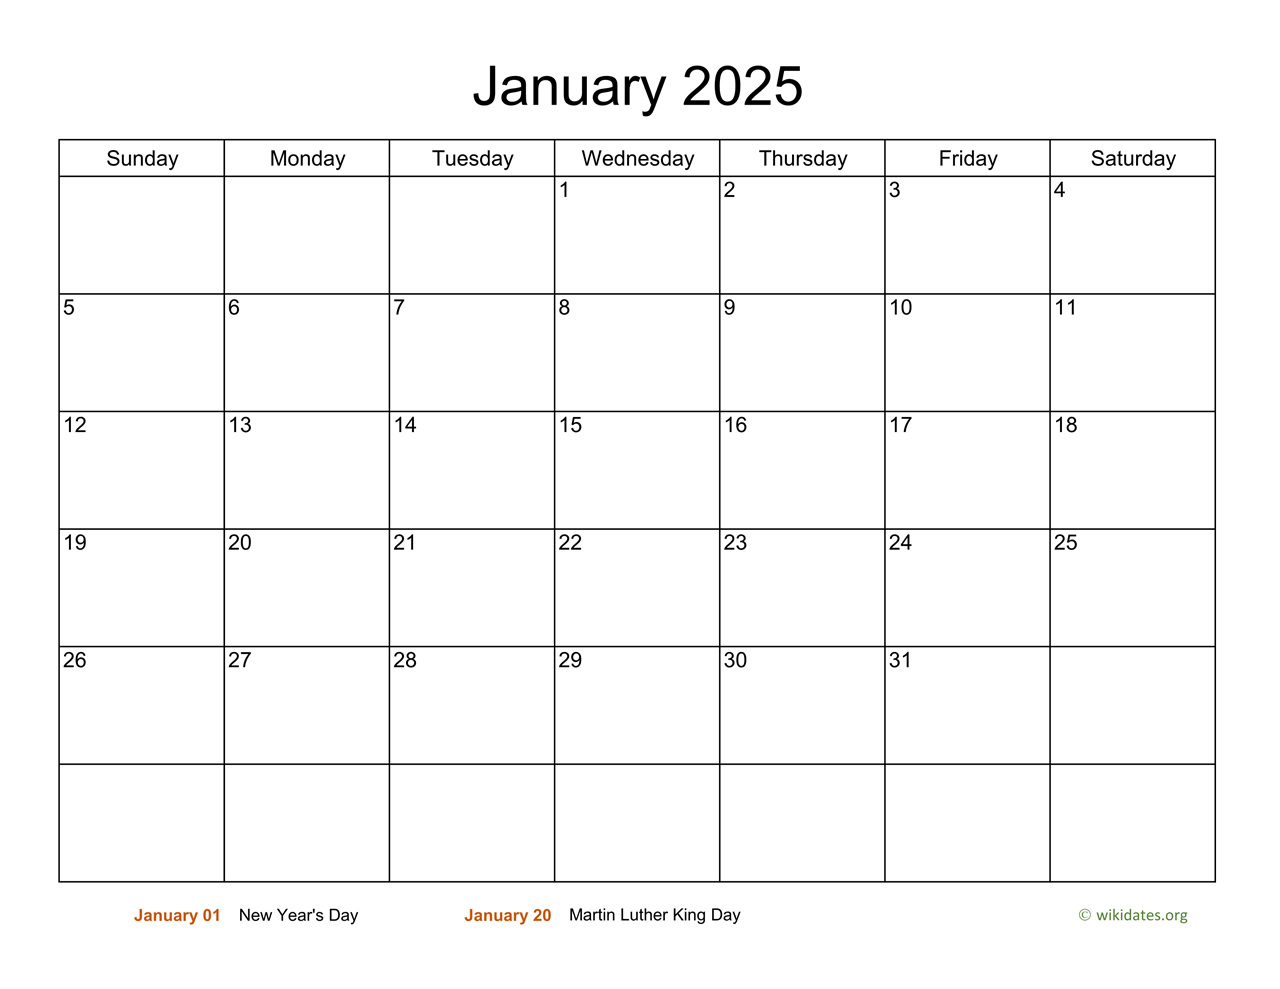 basic-calendar-for-january-2025-wikidates